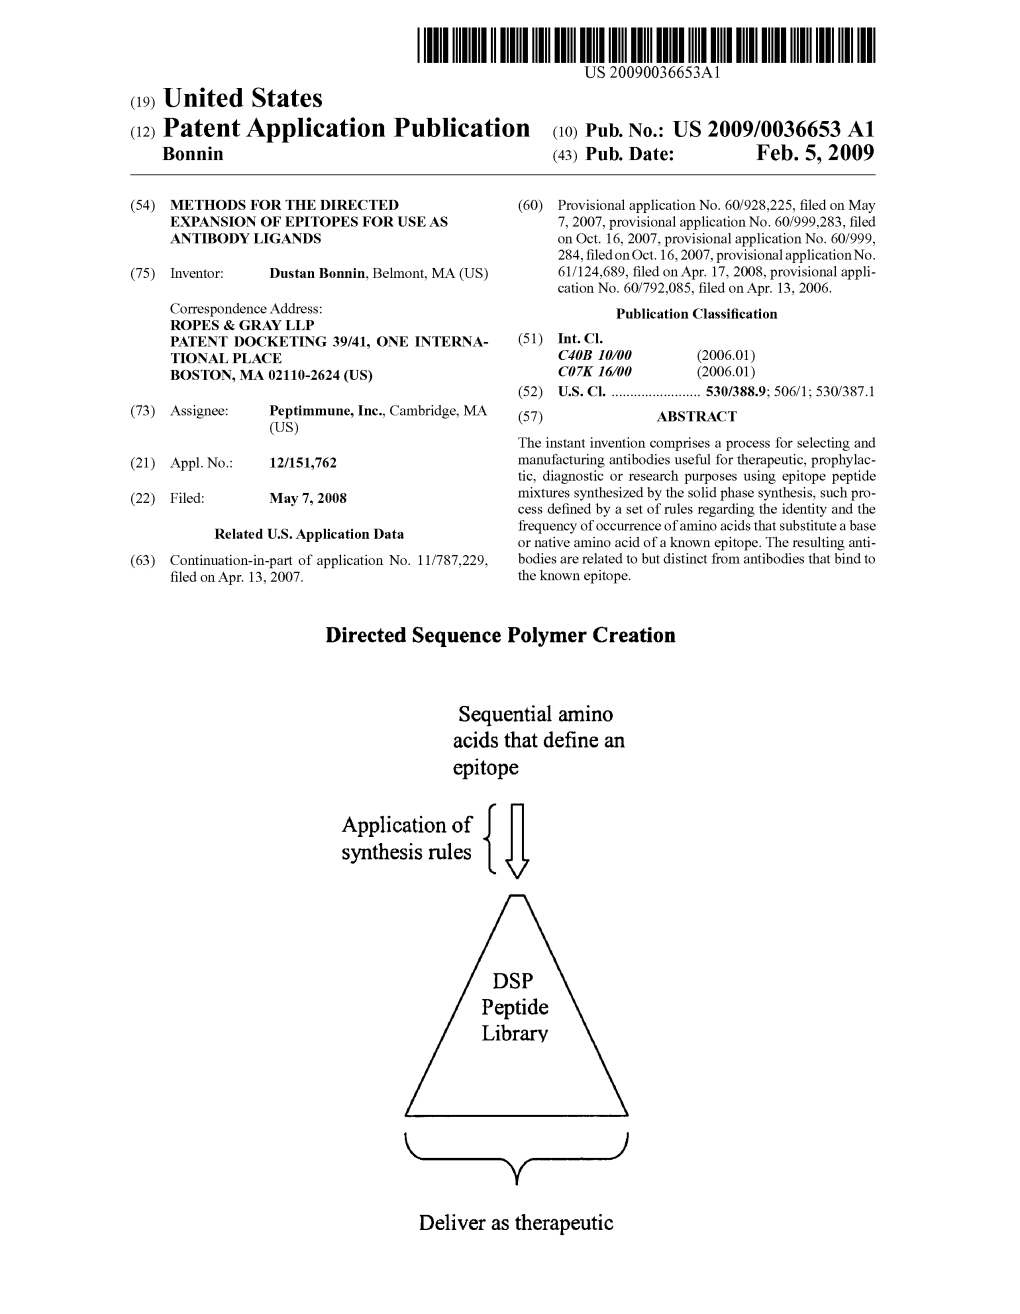 (12) Patent Application Publication (10) Pub. No.: US 2009/0036653 A1 Bonnin (43) Pub